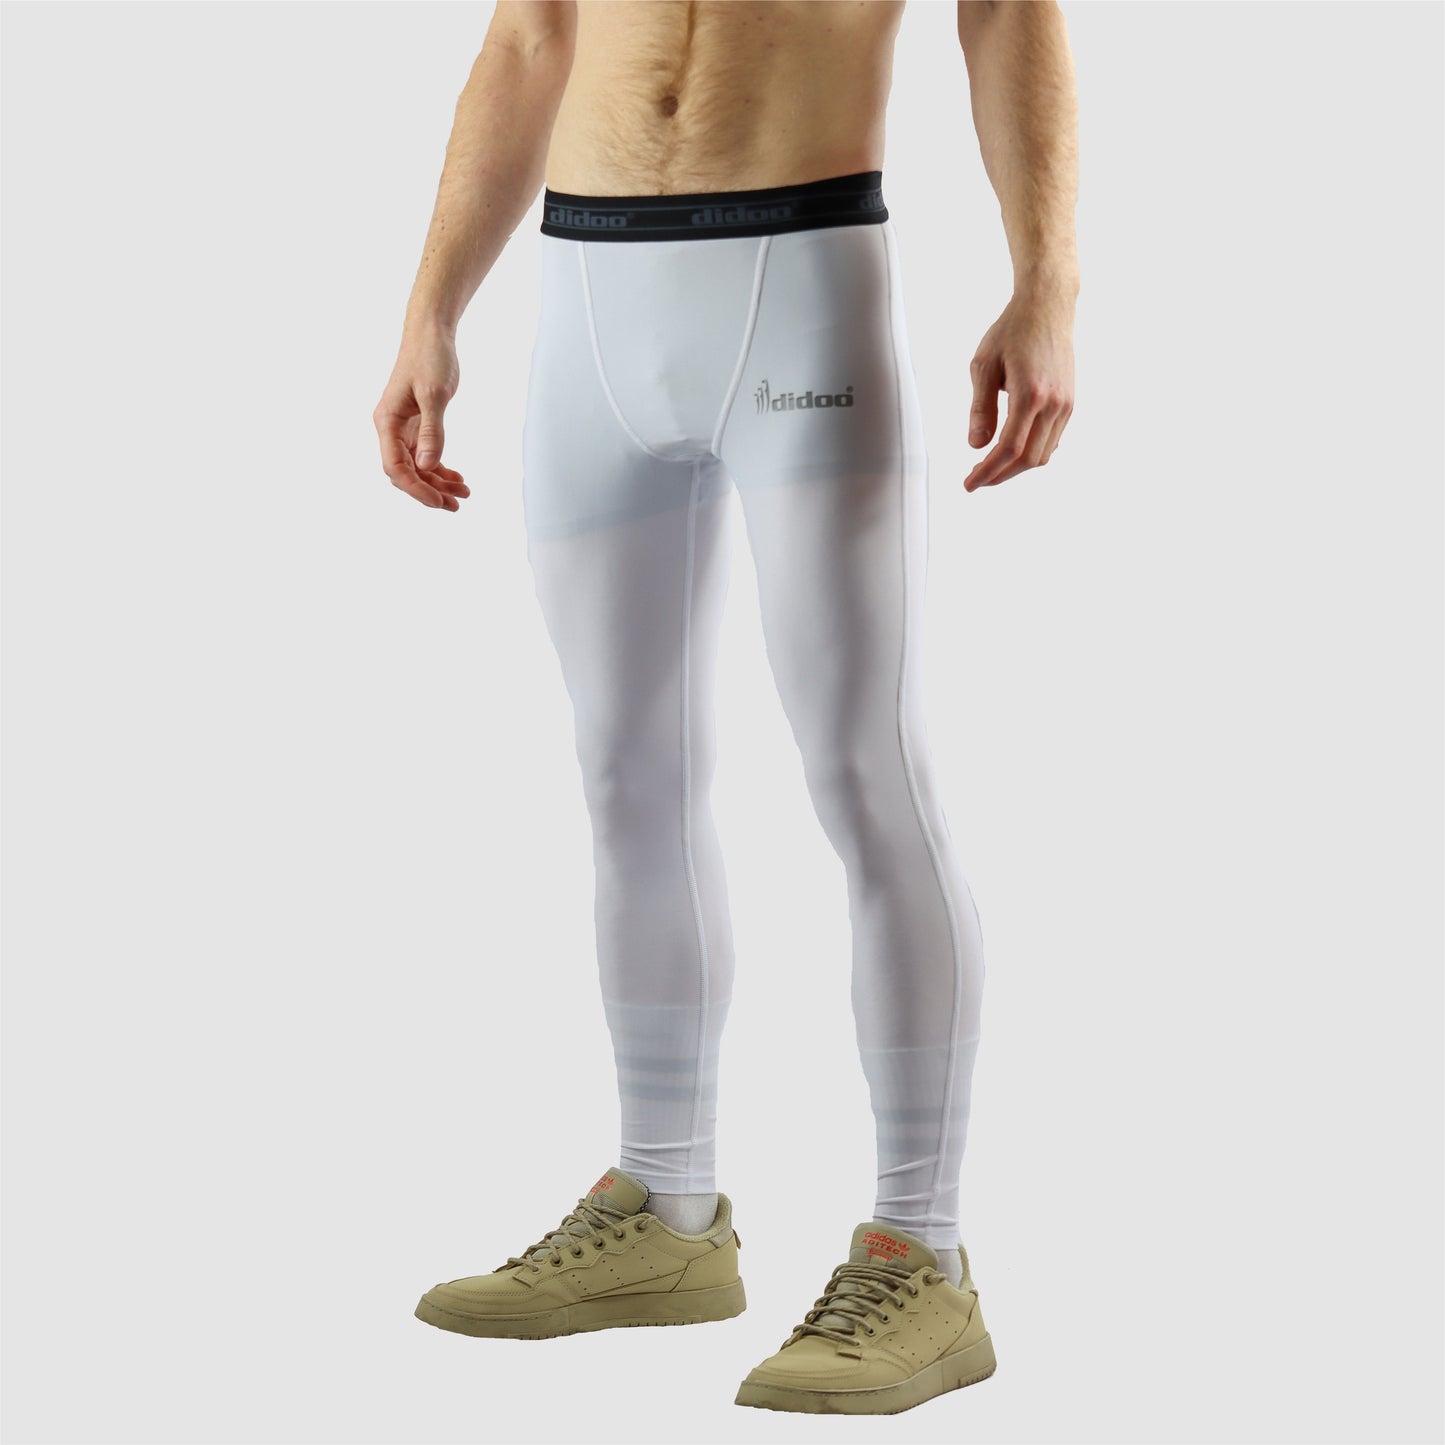 White DiDOO Men's Compression Base Layer Leggings